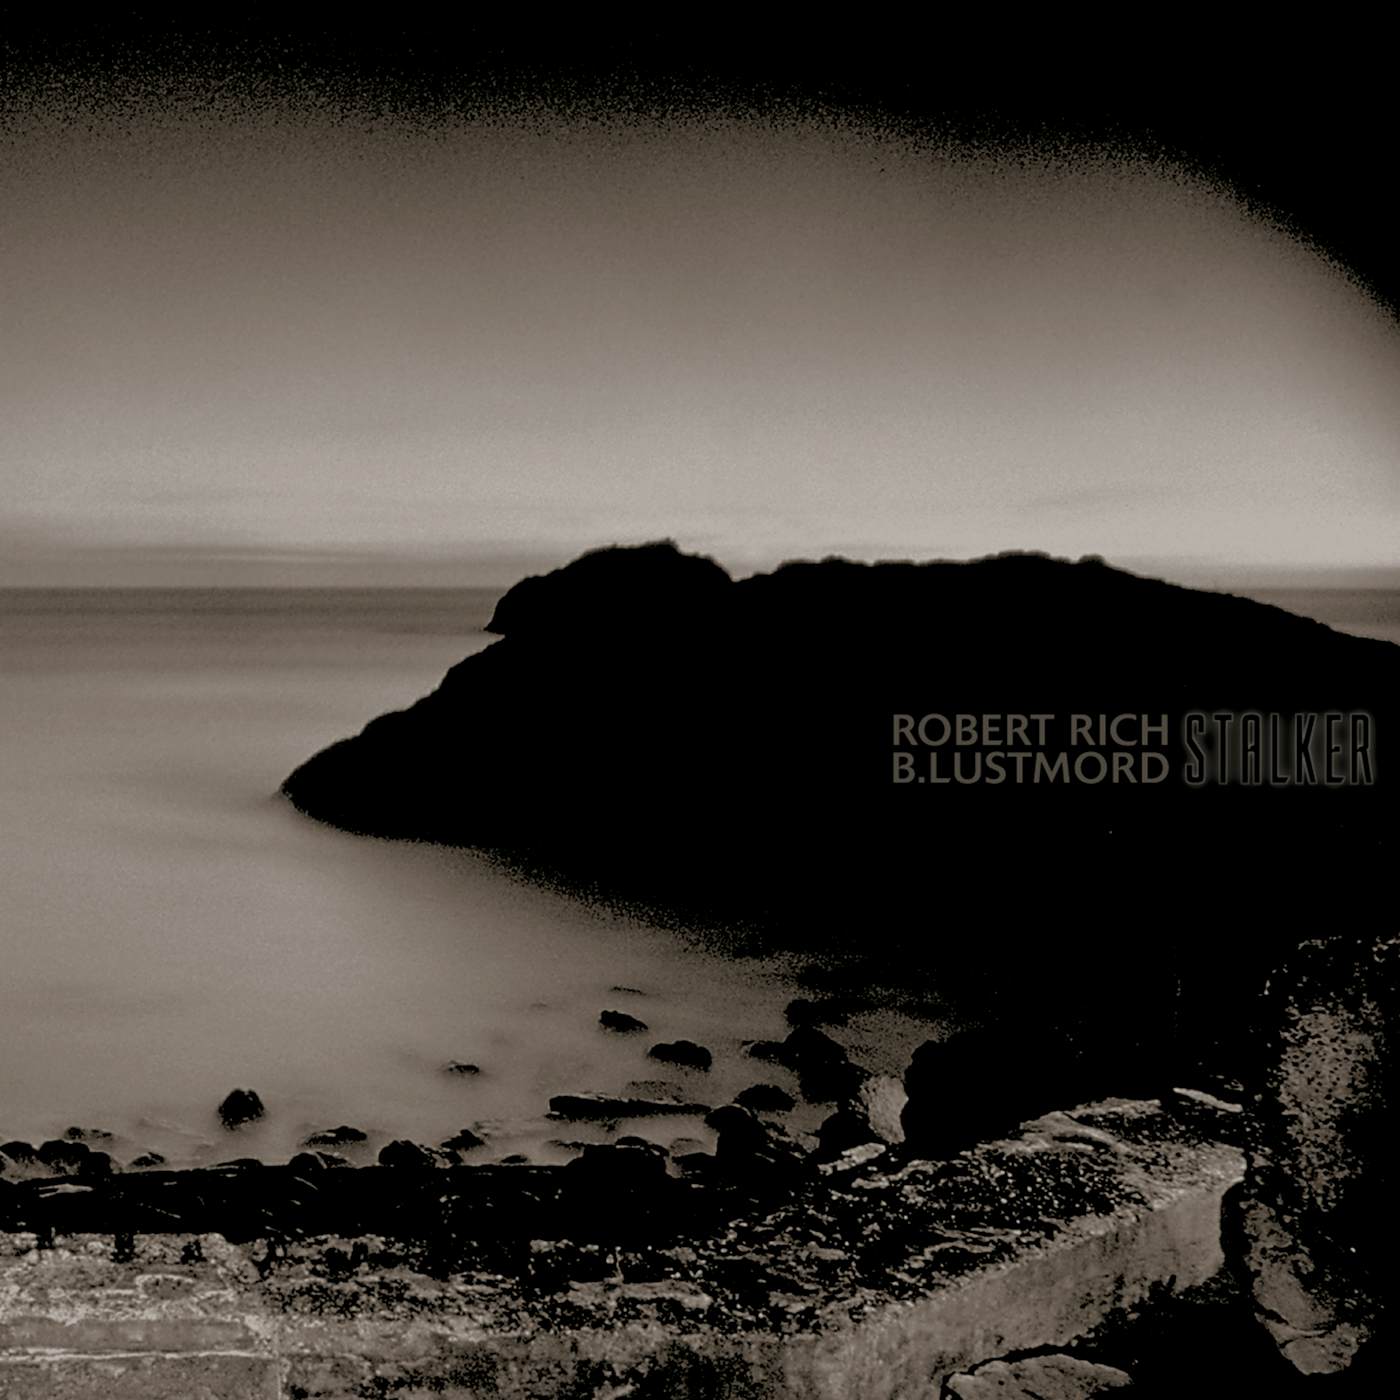 B. Lustmord, Robert Rich Stalker Vinyl Record